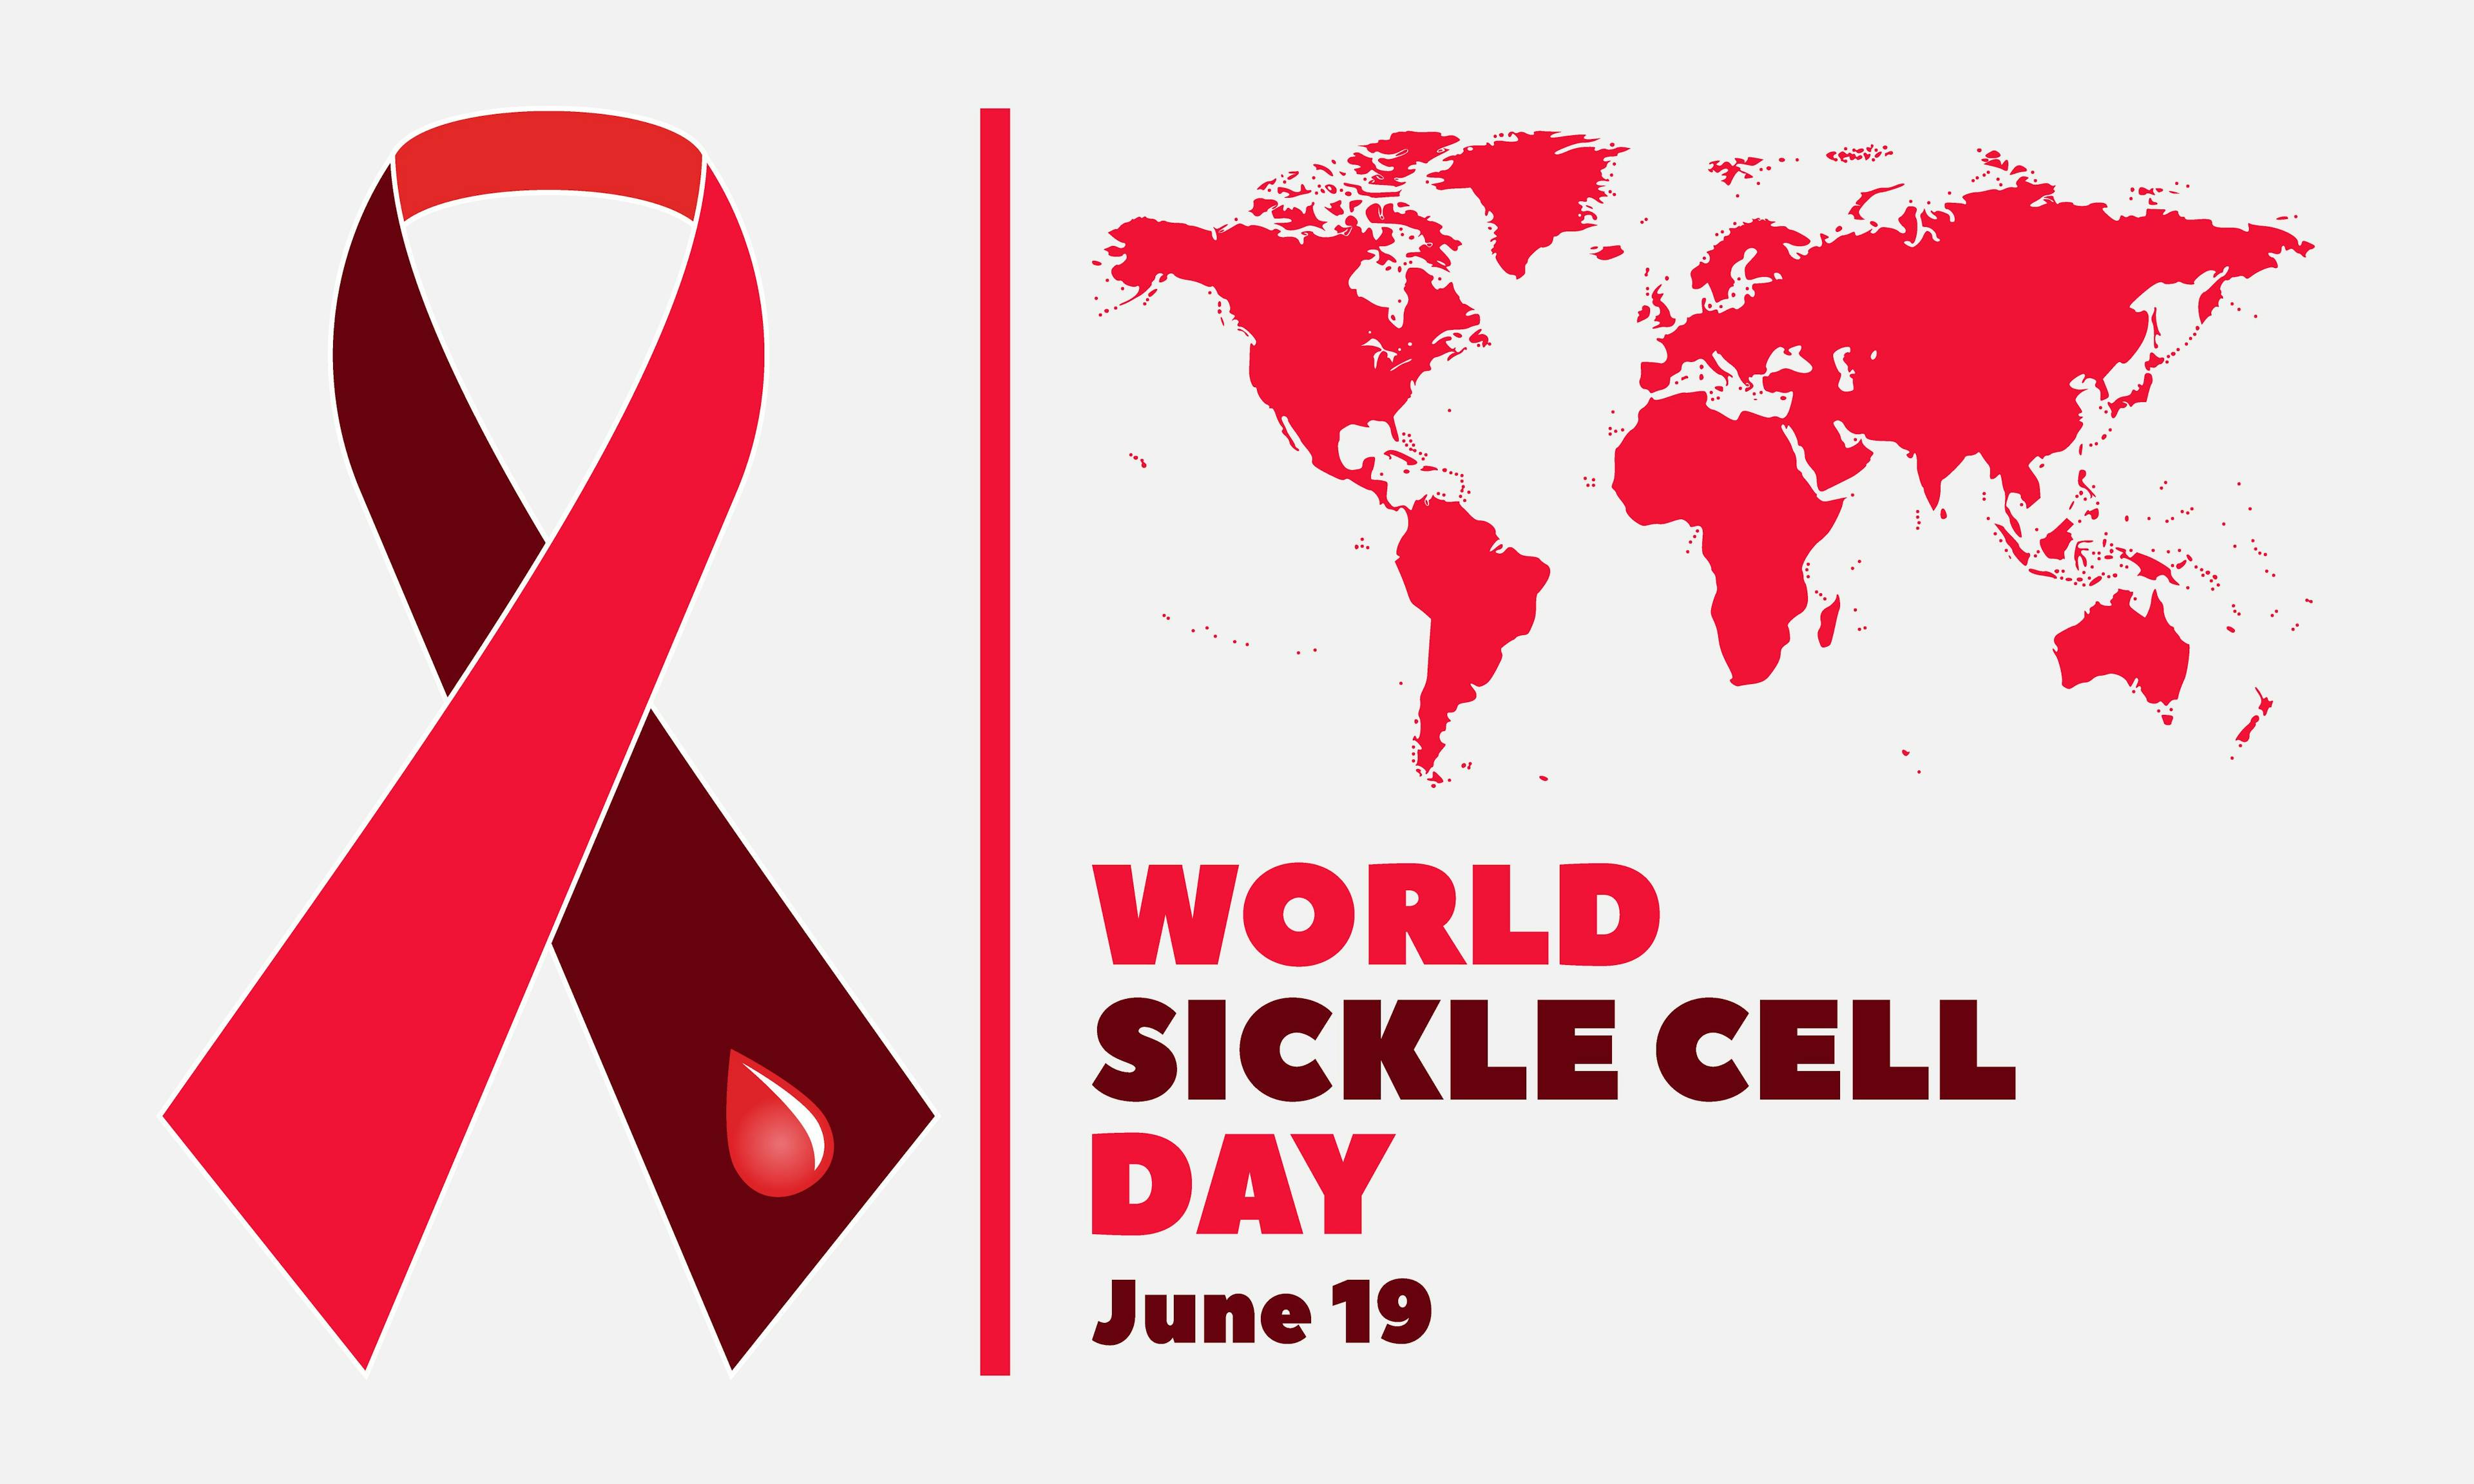 World Sickle Cell Awareness Day was established on June 19, 2009 | image credit: Dm - stock.adobe.com